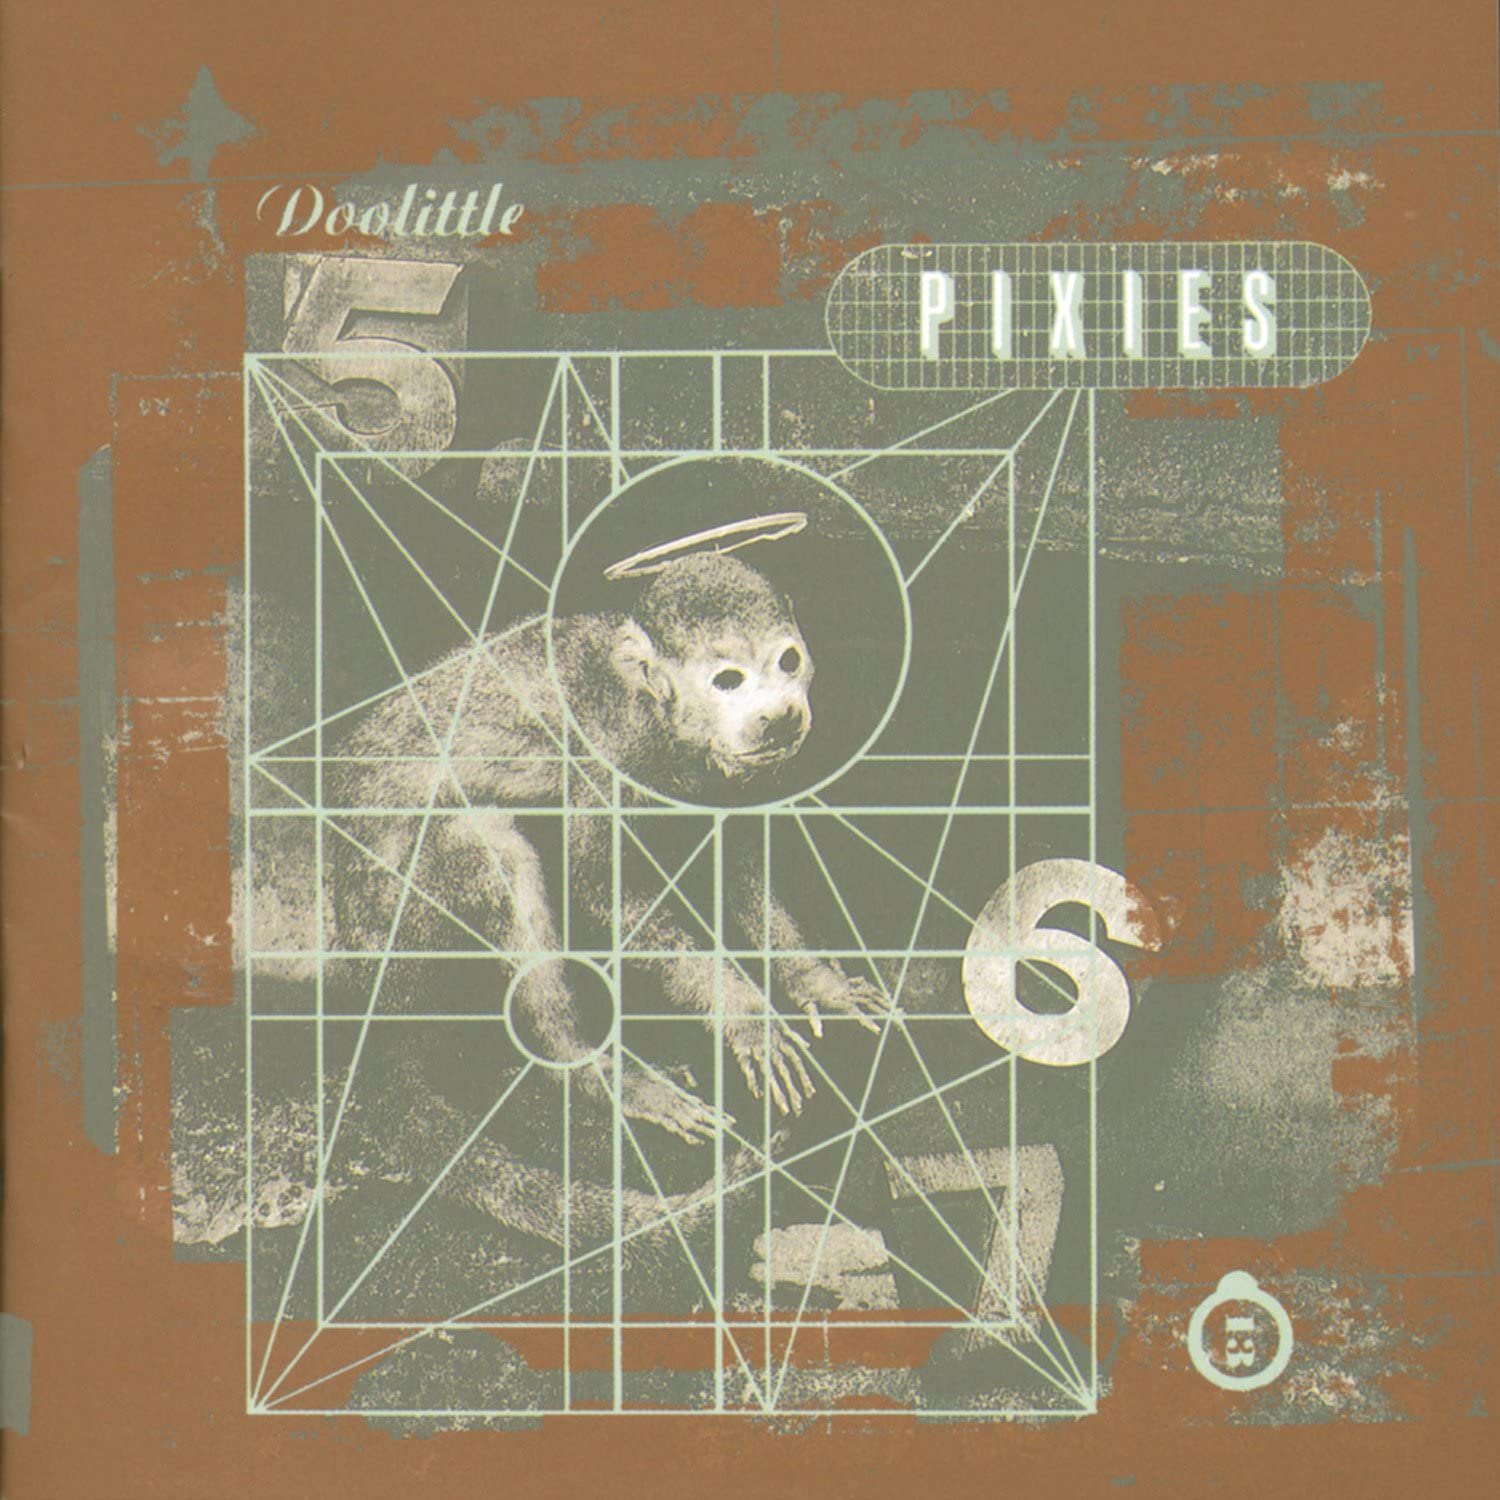 Legendary Pixies album on Vinyl featuring Debaser, Wave of Mutilation and Money Gone To Heaven.